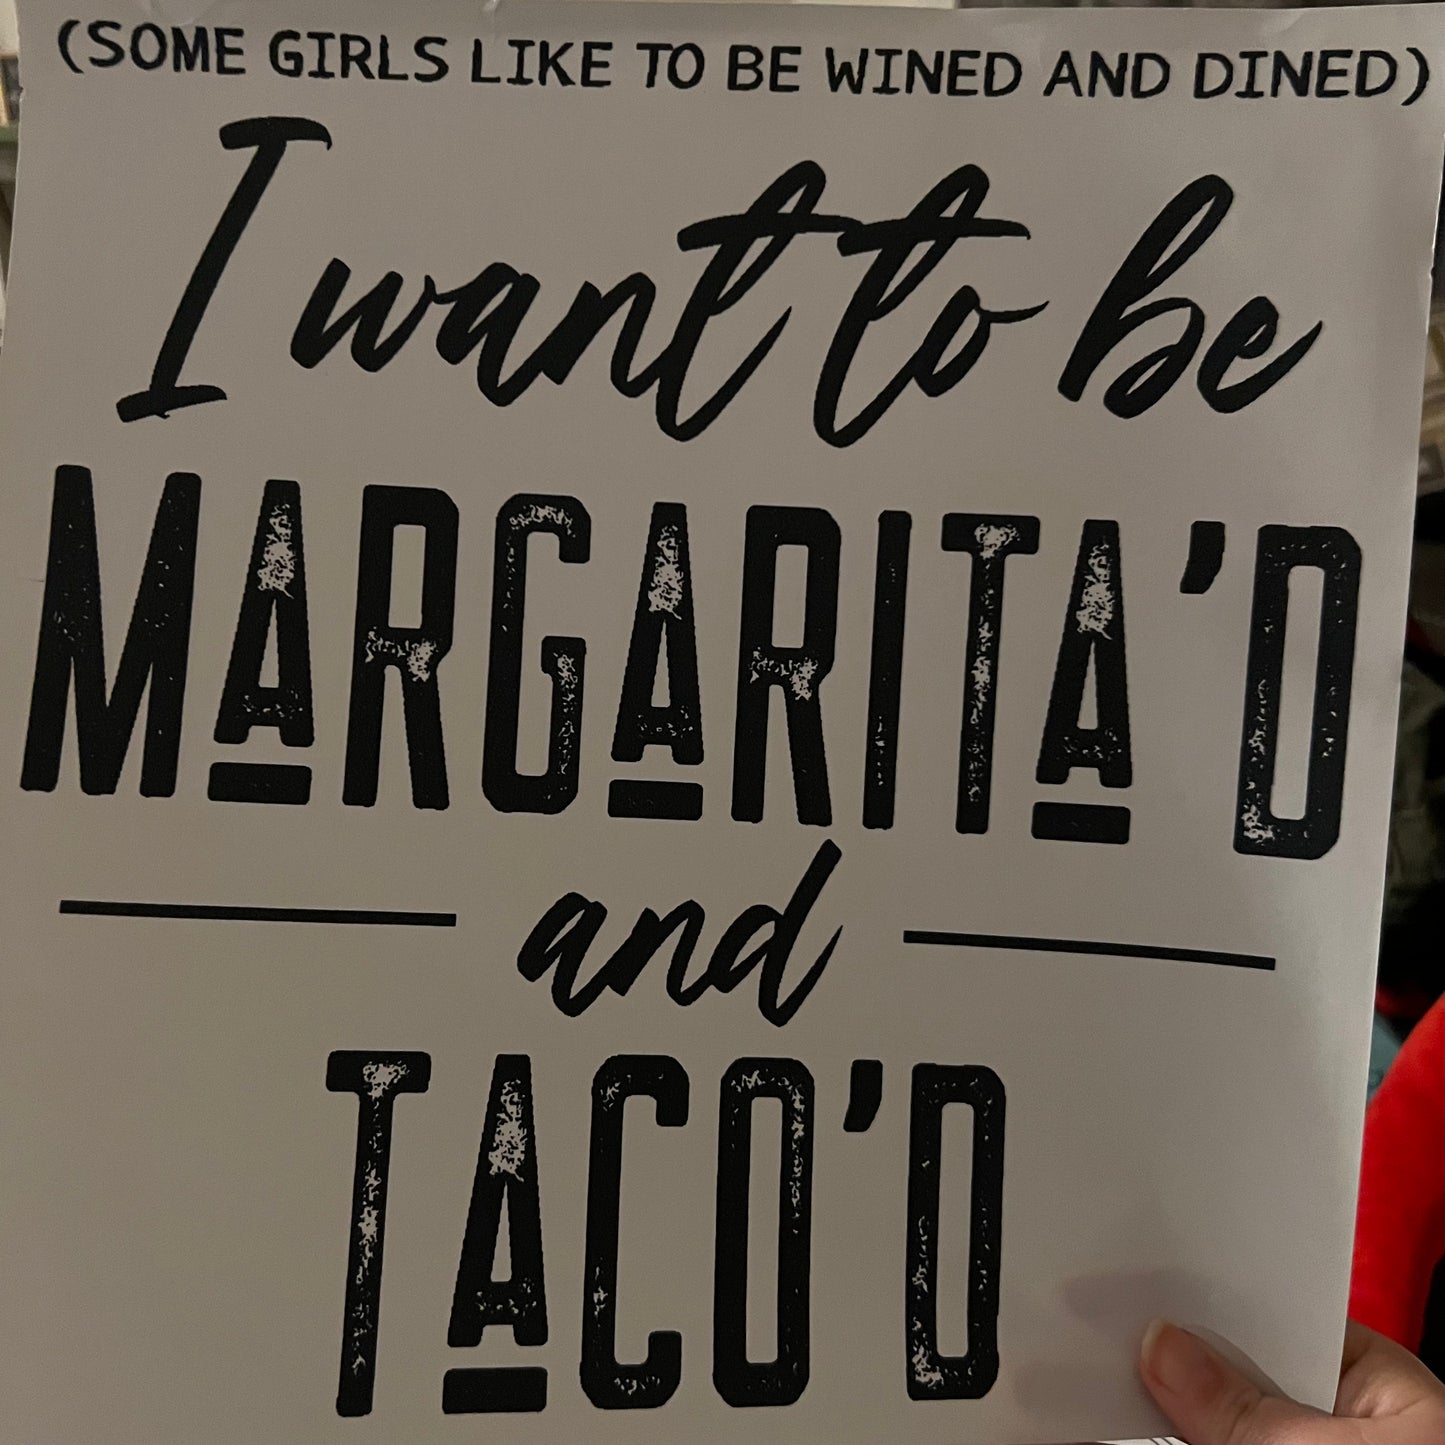 I Want To Be Margarita’d Screen Print